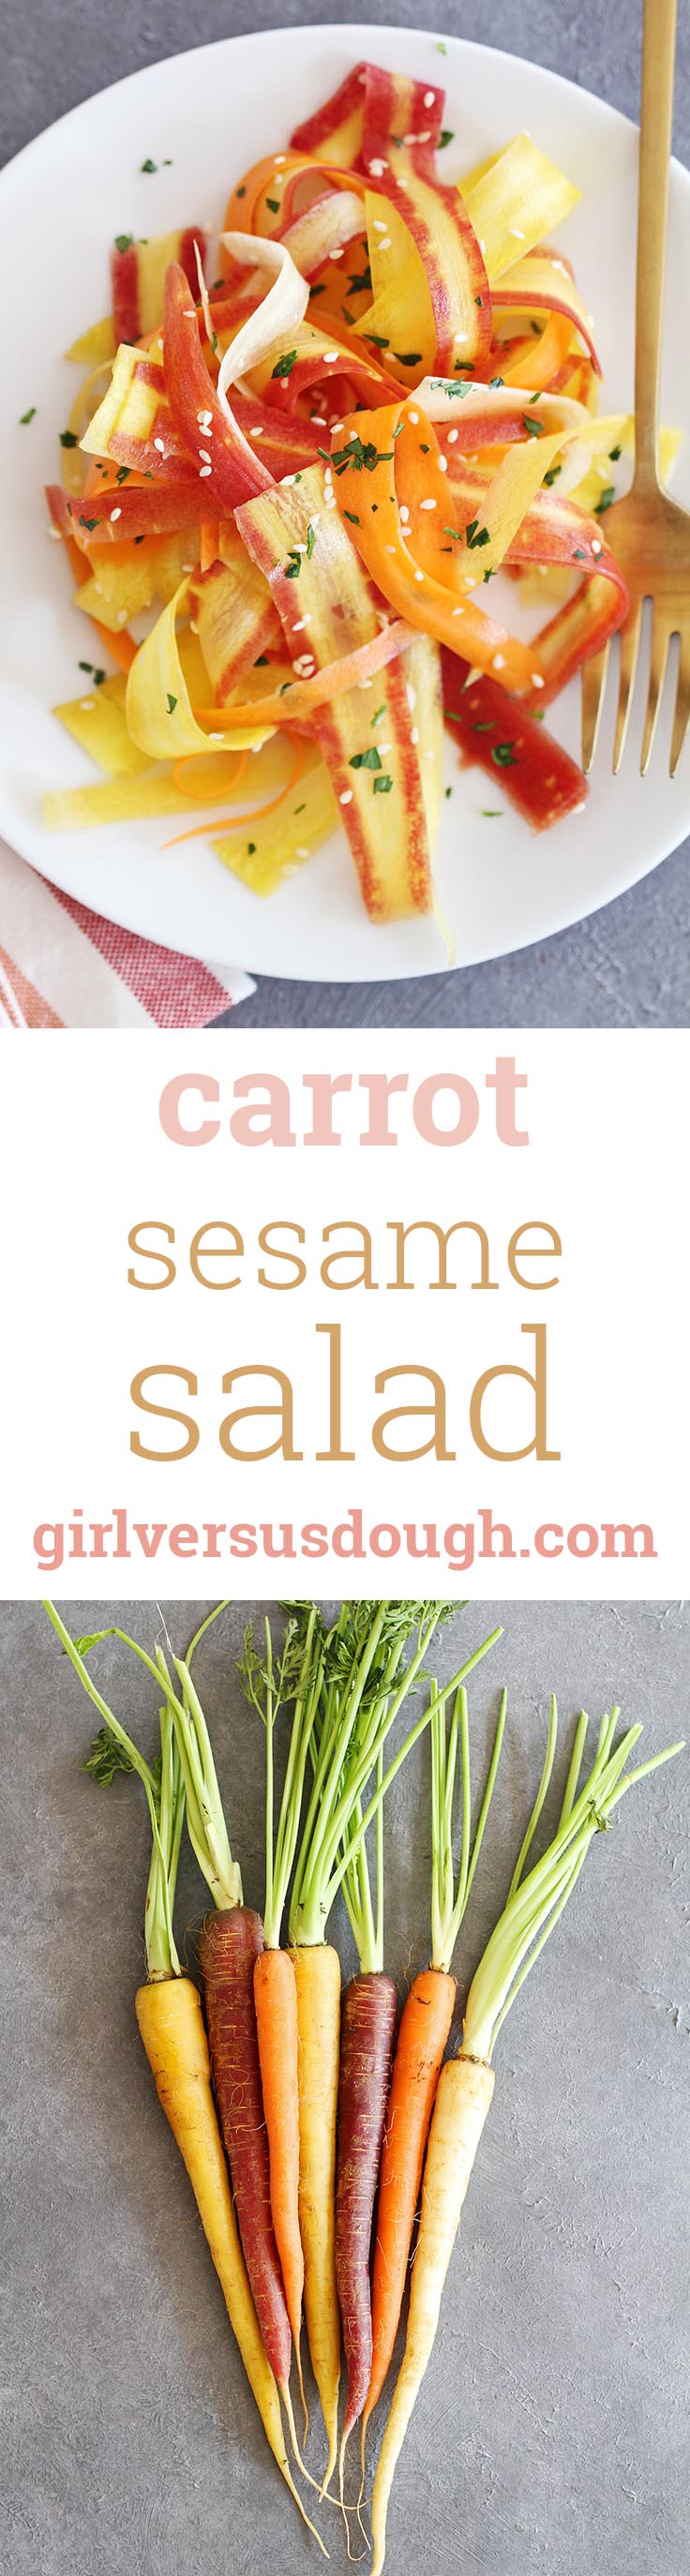 Carrot Sesame Salad -- Sweet, salty, crunchy and fresh. Easy to make, gluten free, vegan and delicious! girlversusdough.com @girlversusdough